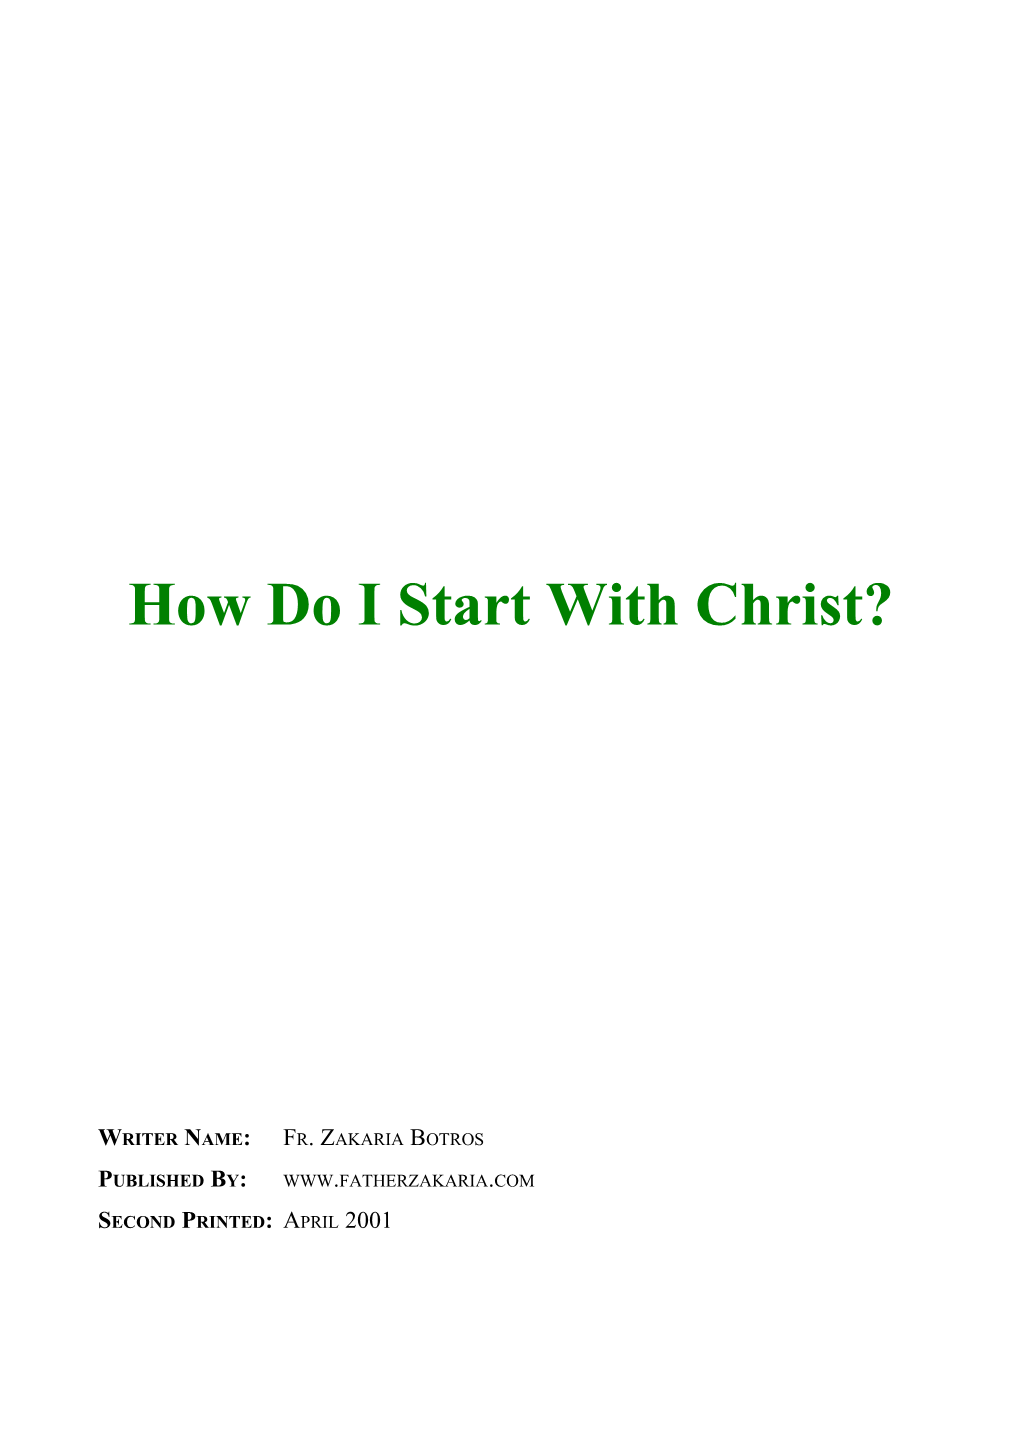 How Do I Start with Christ